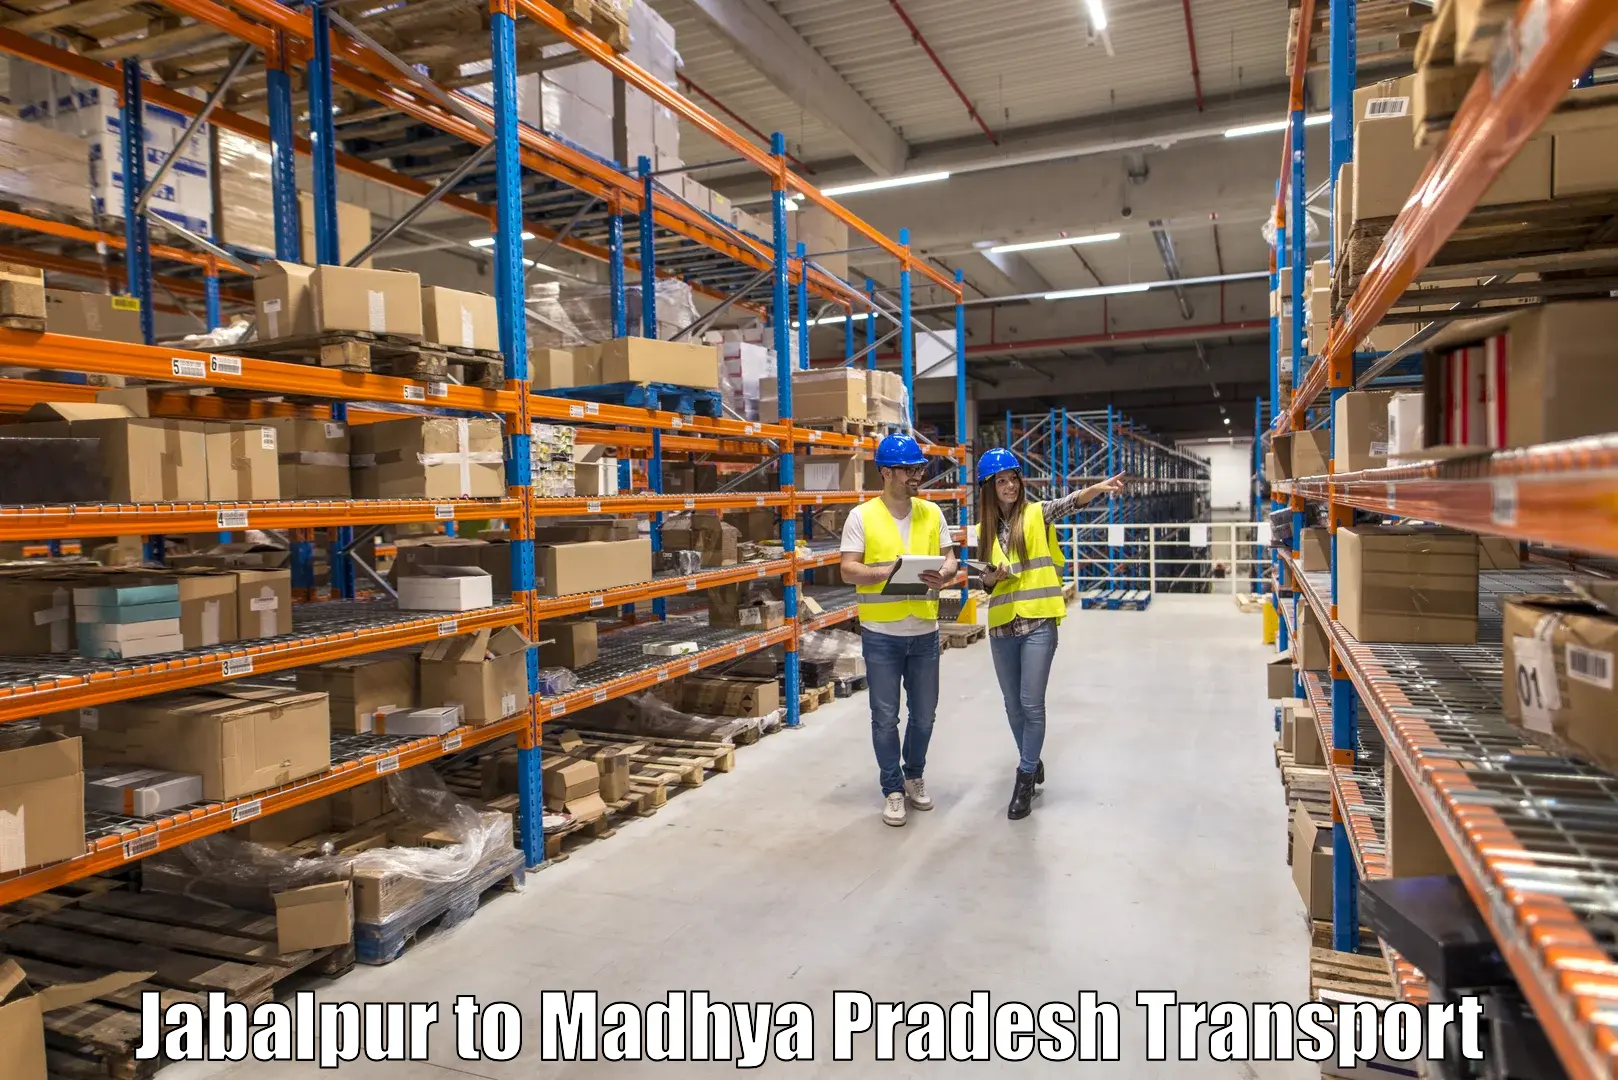 Daily parcel service transport Jabalpur to Kesali